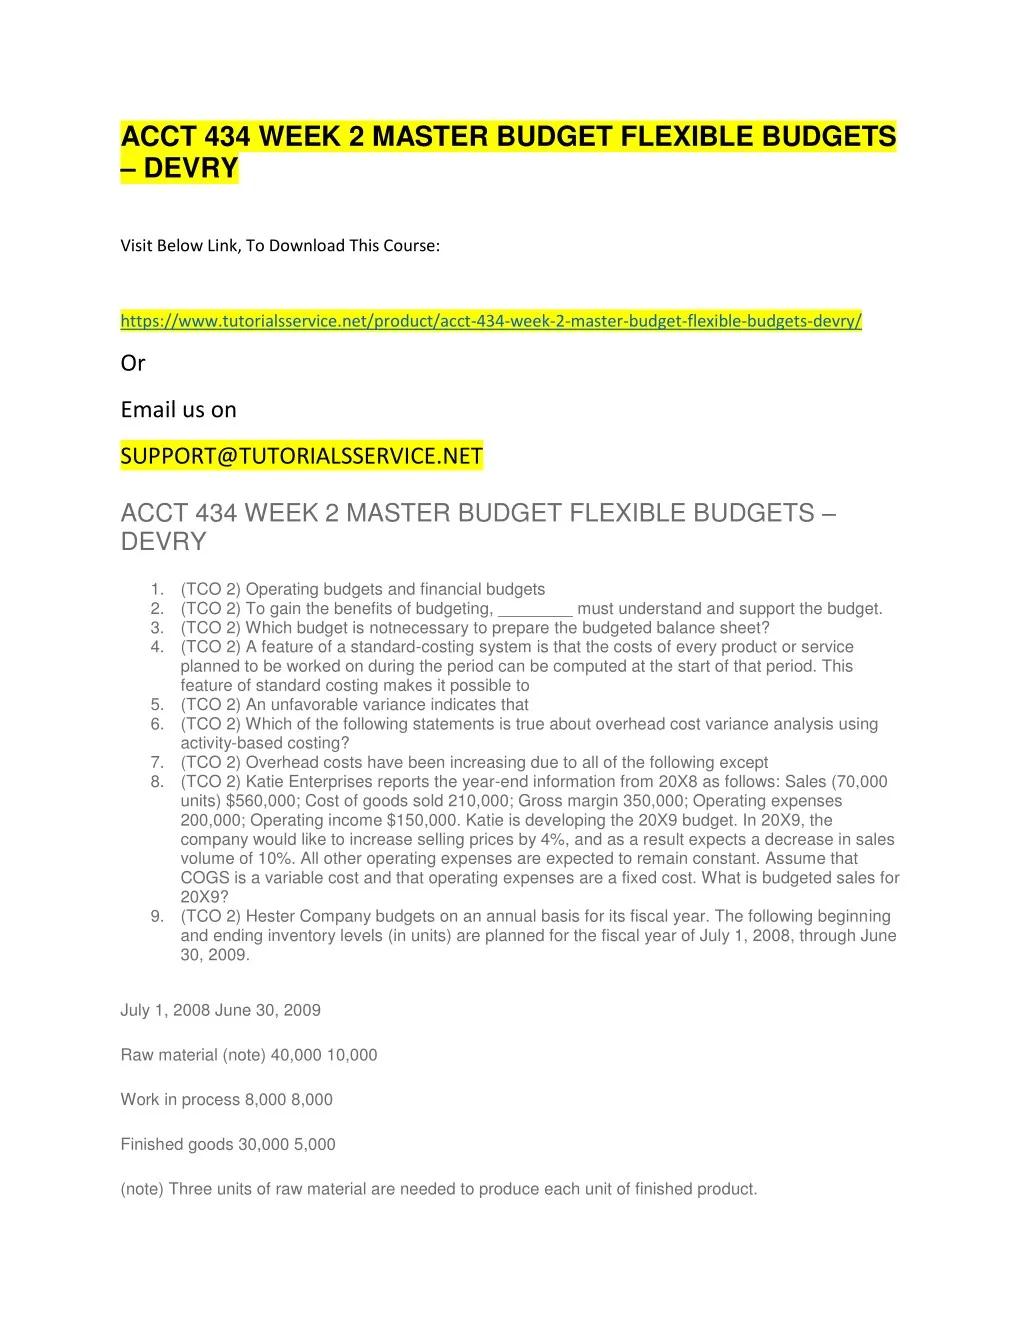 acct 434 week 2 master budget flexible budgets